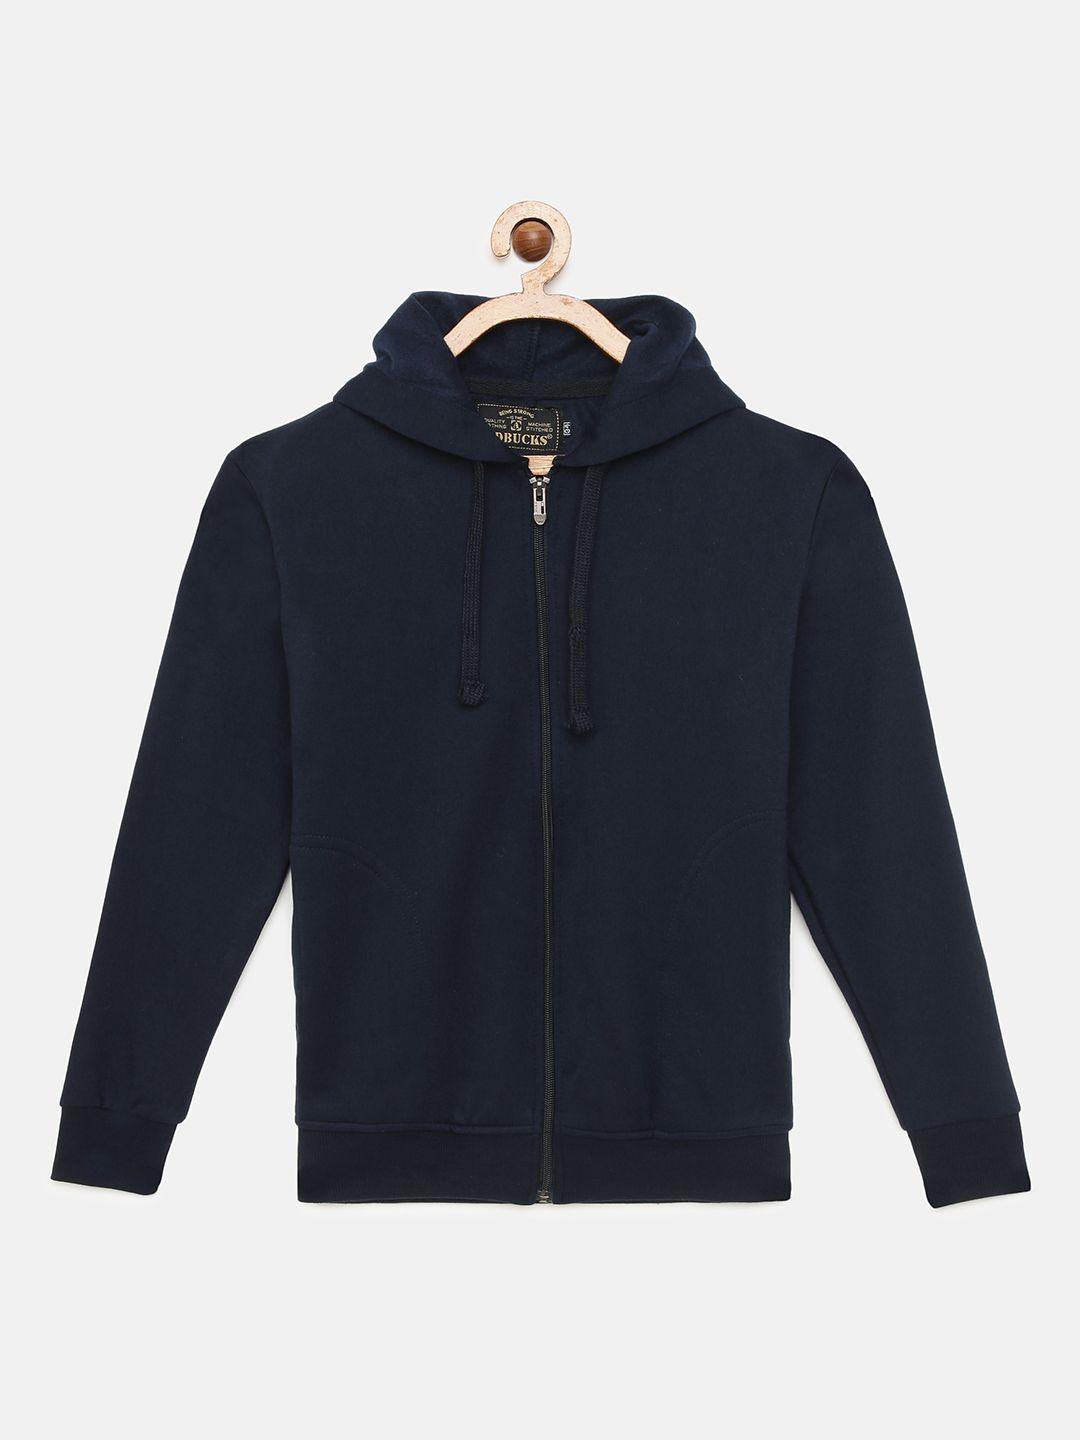 adbucks-boys-blue-solid-hooded-sweatshirt